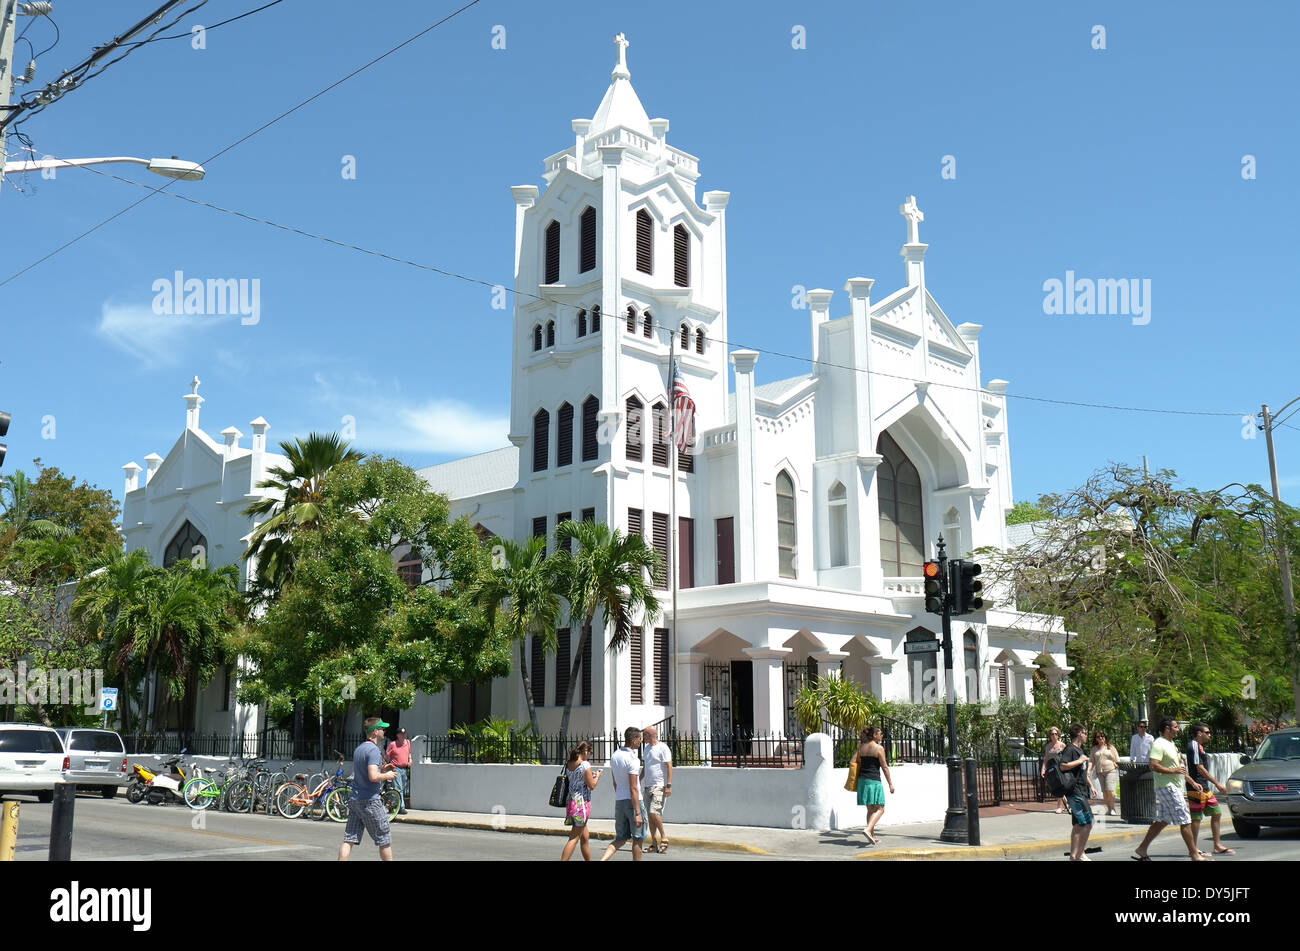 St. Paul's Episcopal Church on Duval Street, Key West, Florida Stock Photo